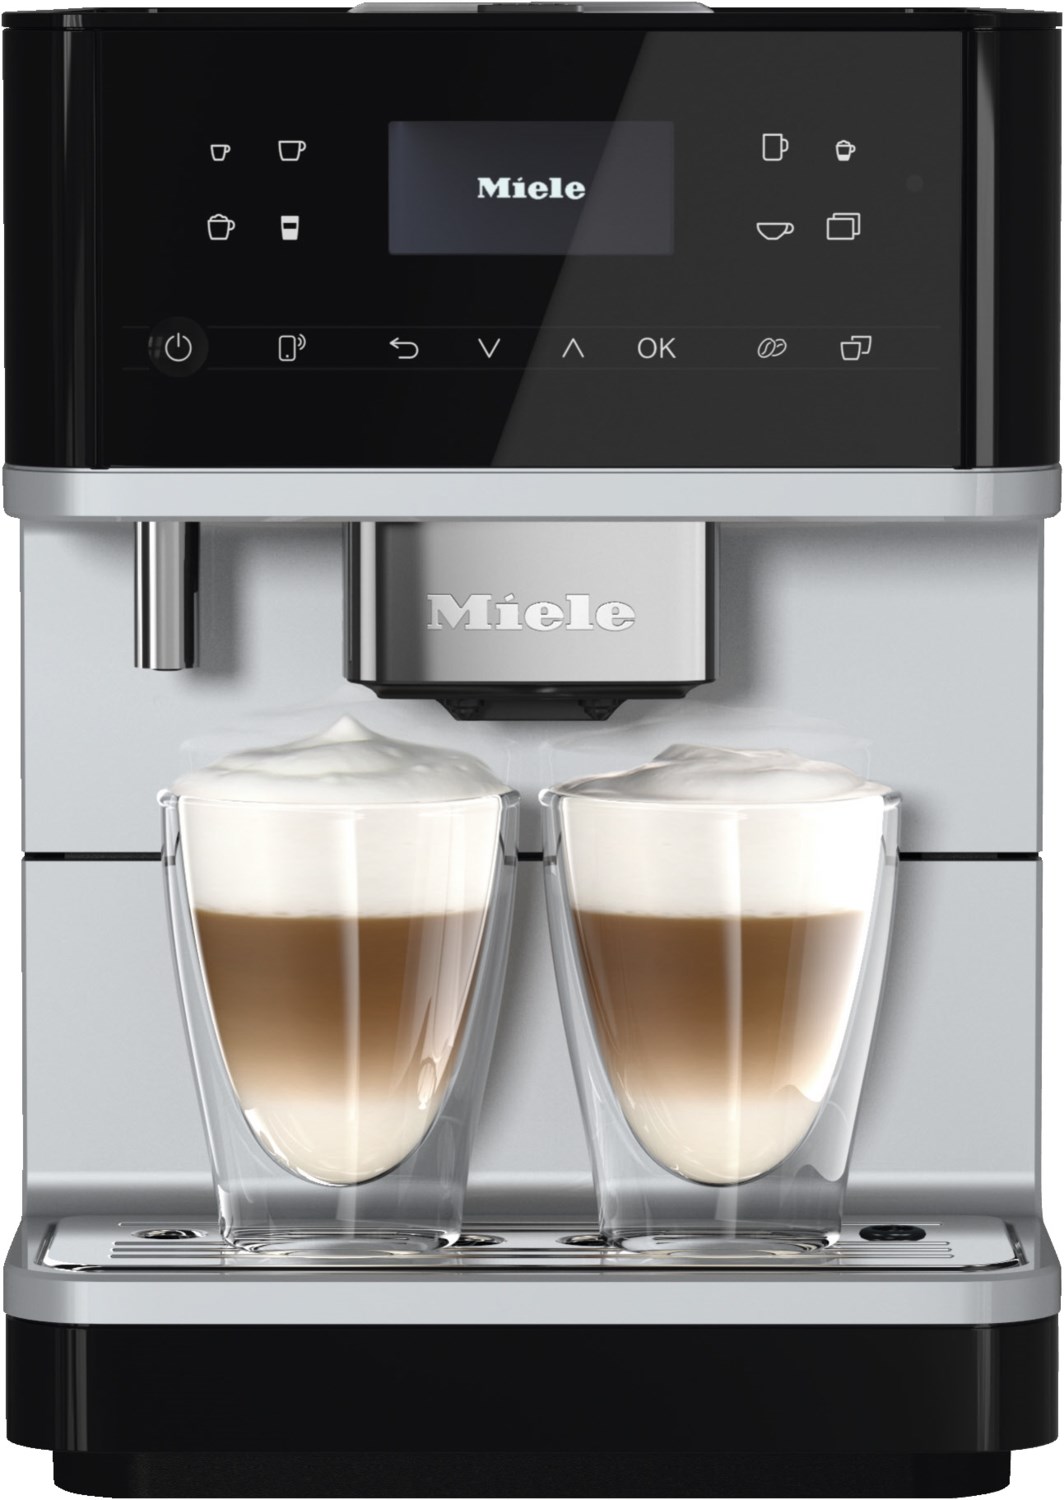 CM 6160 Silver Edition Kaffee-Vollautomat alusilber/metallic von Miele